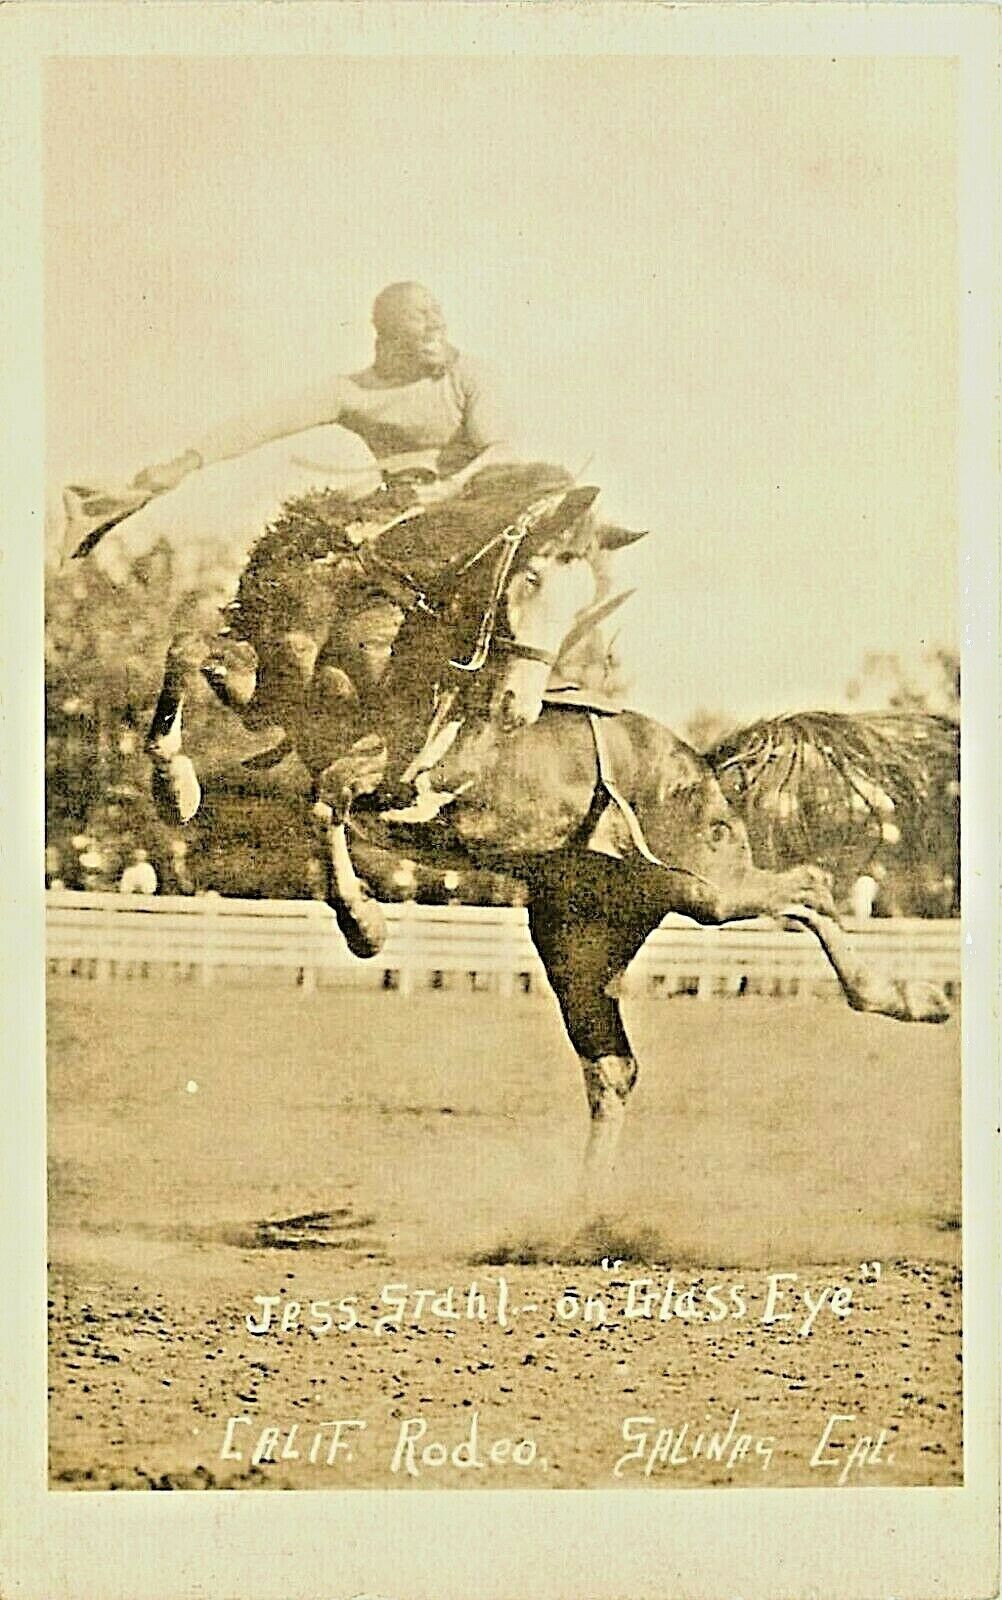 RPPC Black Cowboy Jesse Stahl on Bucking Horse Glass Eye Rodeo Salinas CA 1912